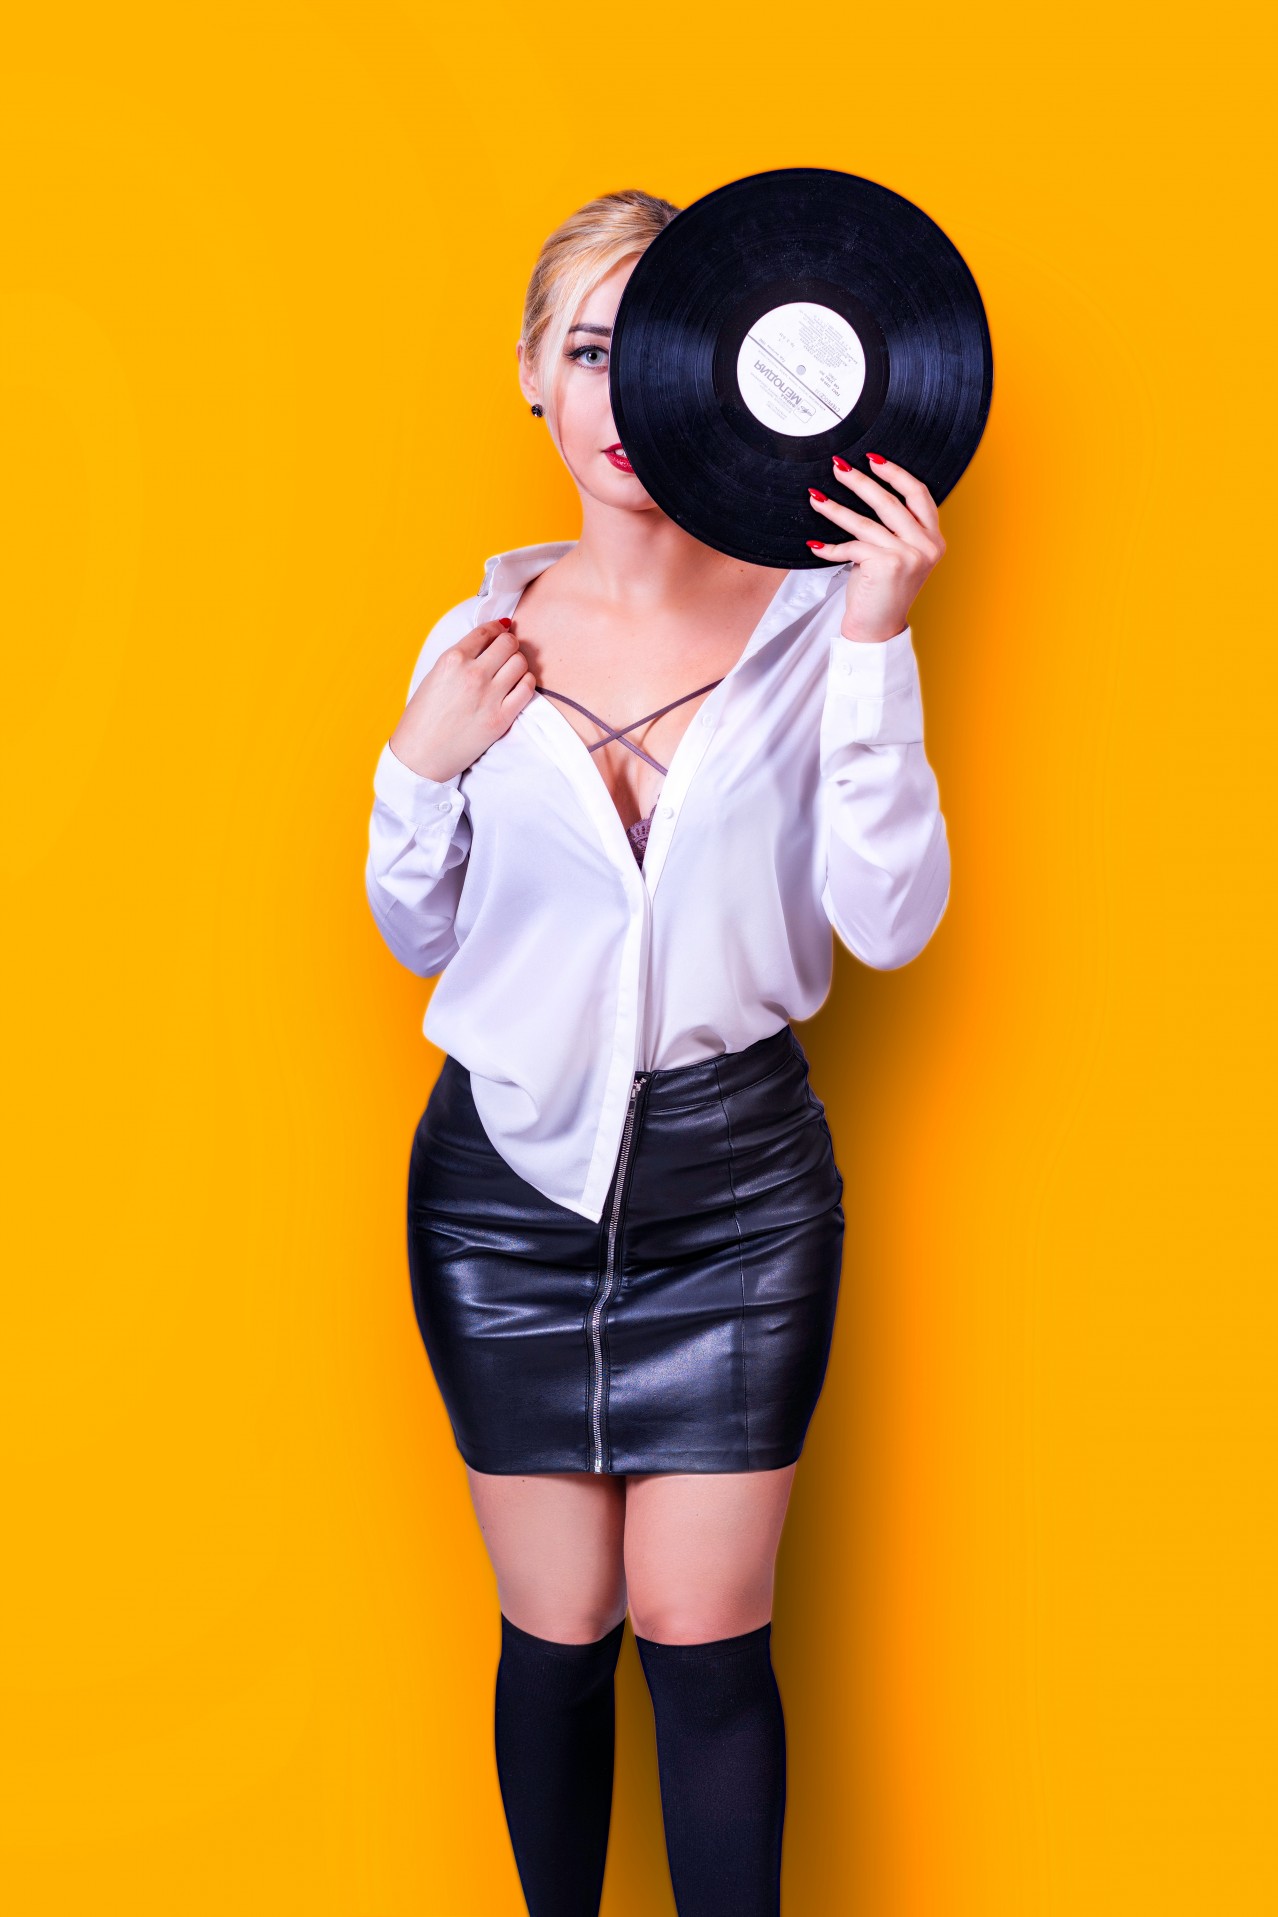 Hot girl holding retro vinyl record